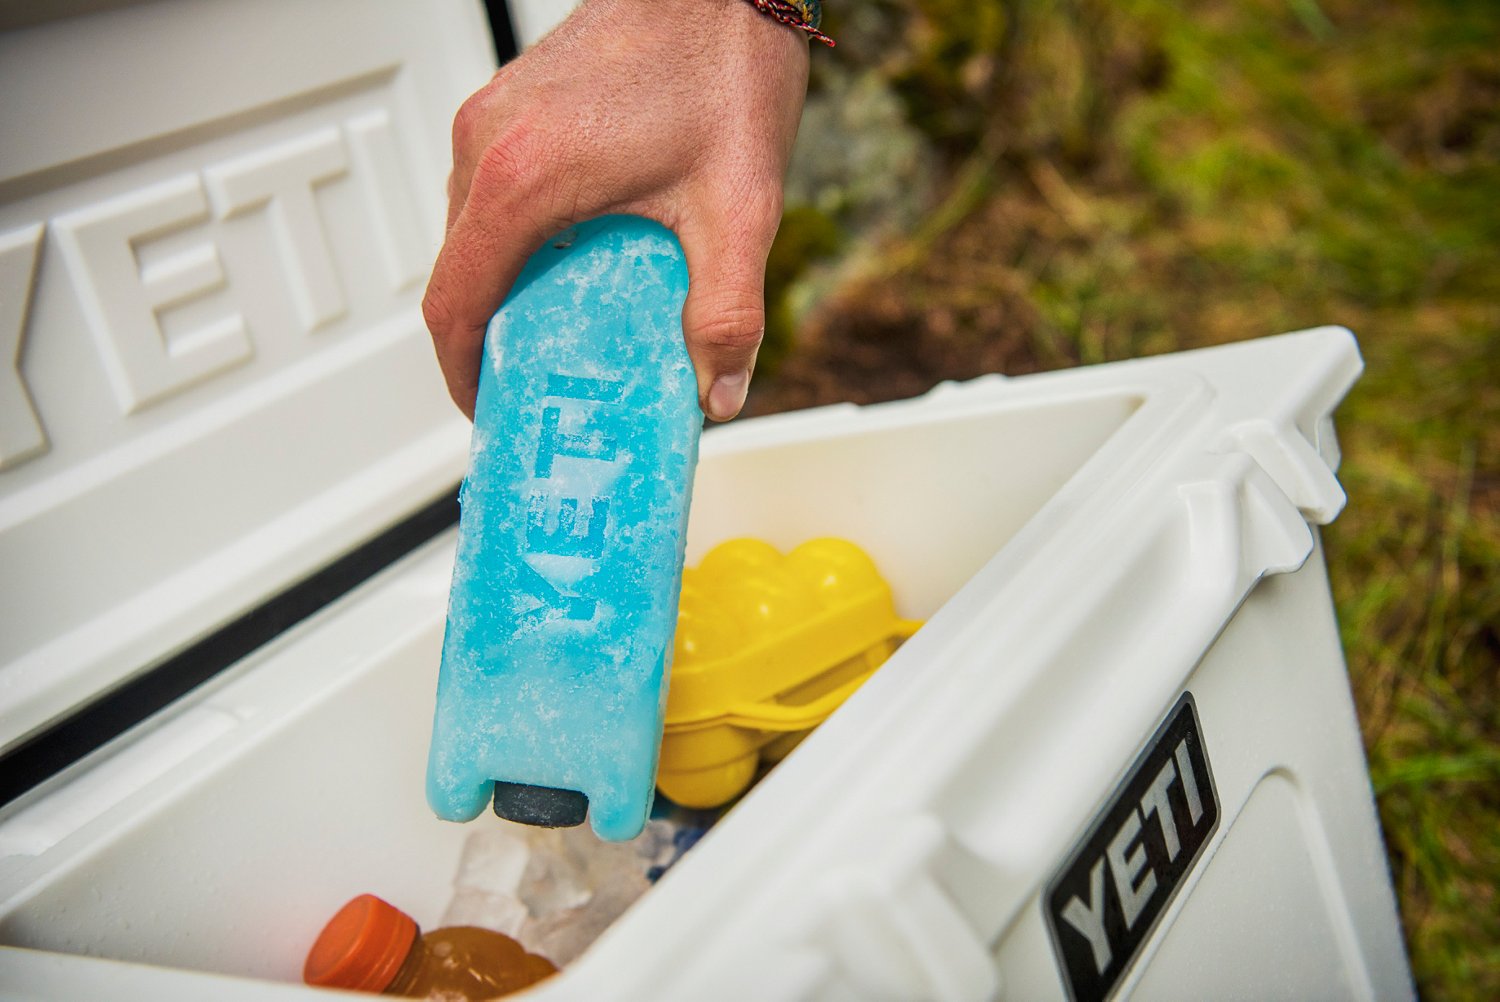 Yeti Cooler Ice Pack, 1-Pound